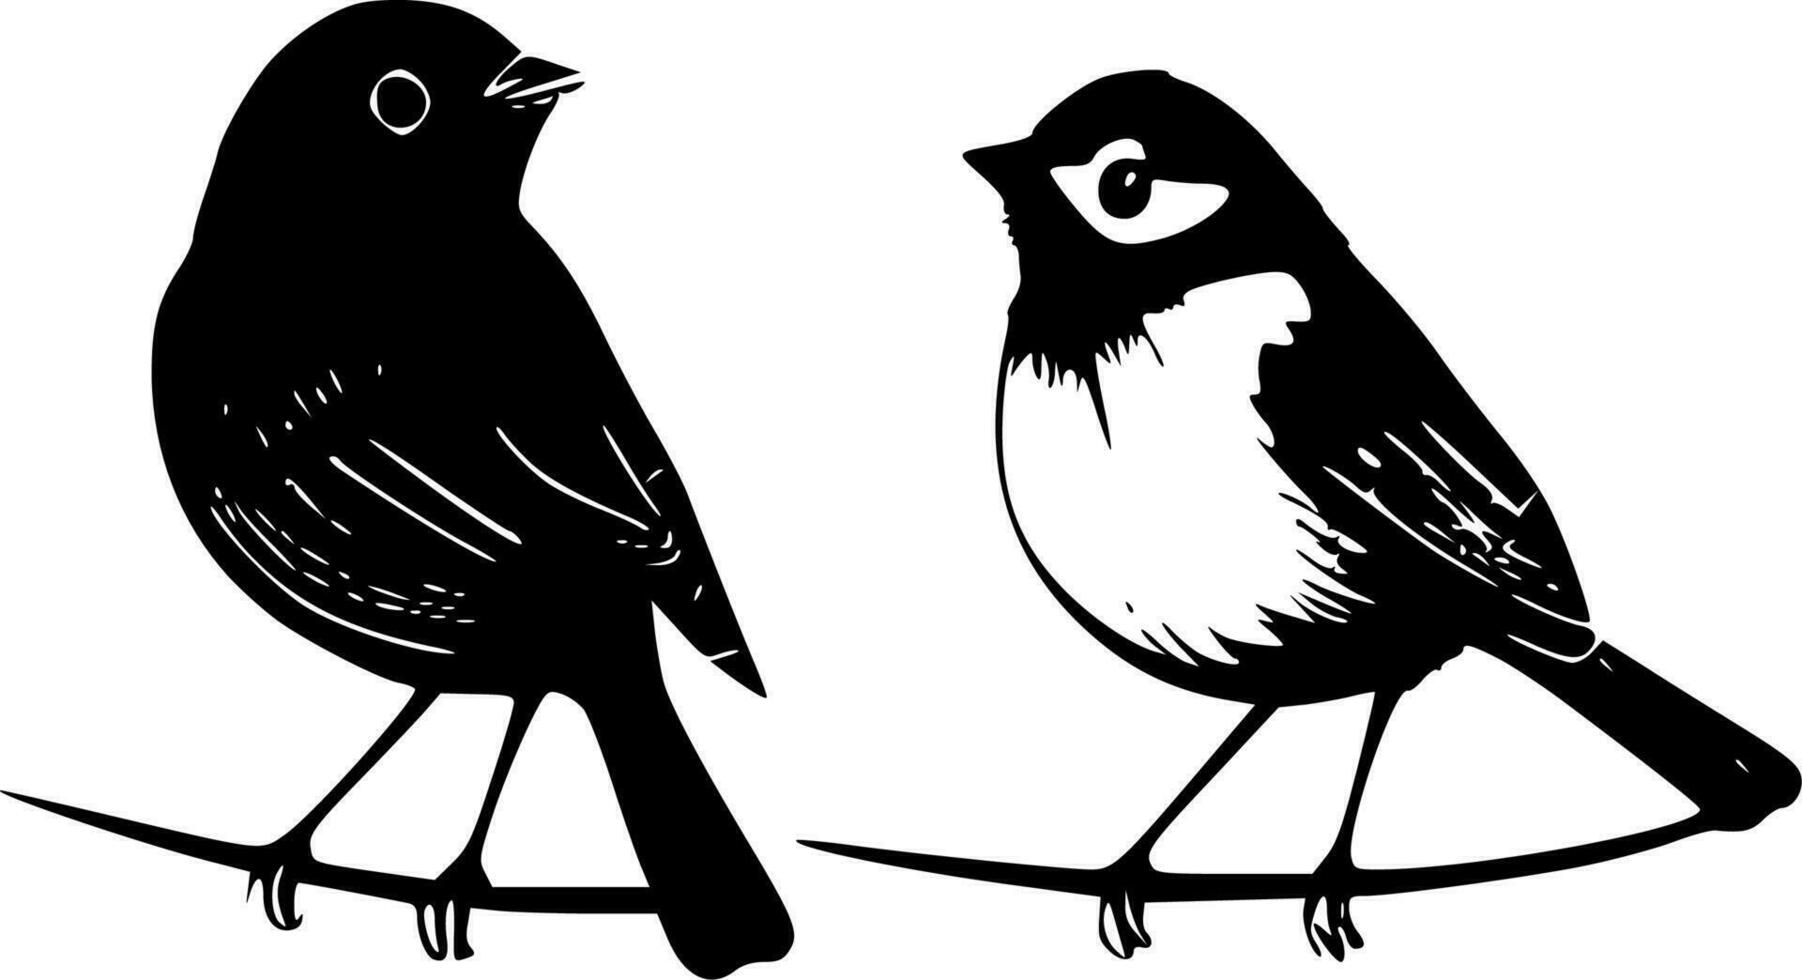 Birds, Black and White Vector illustration